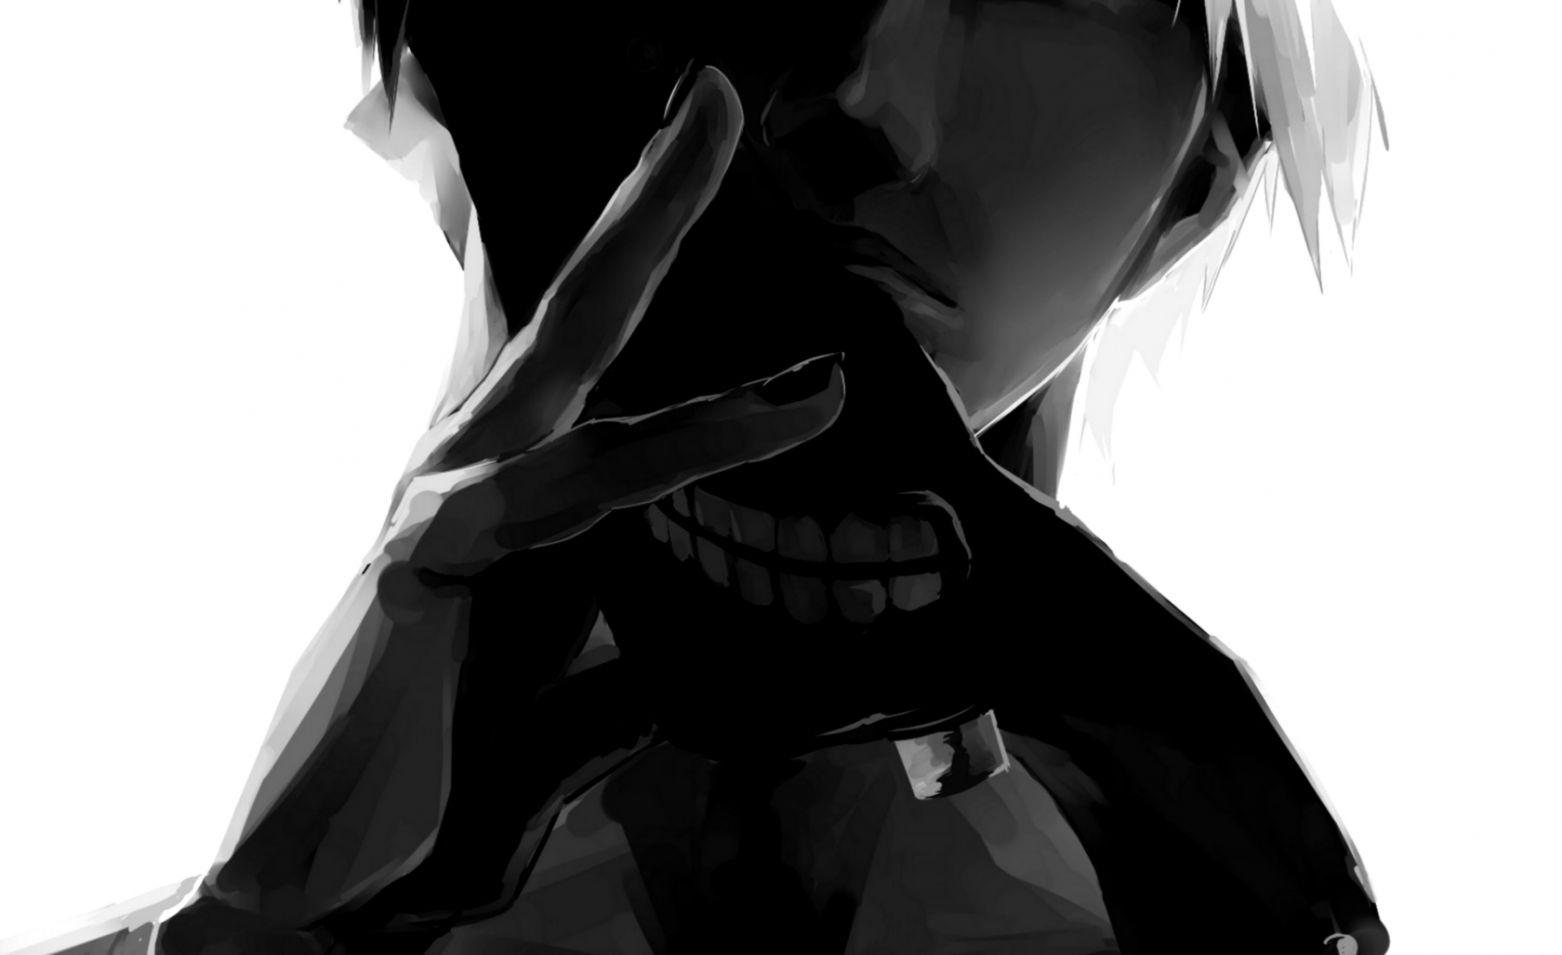 black and white anime boy gas mask